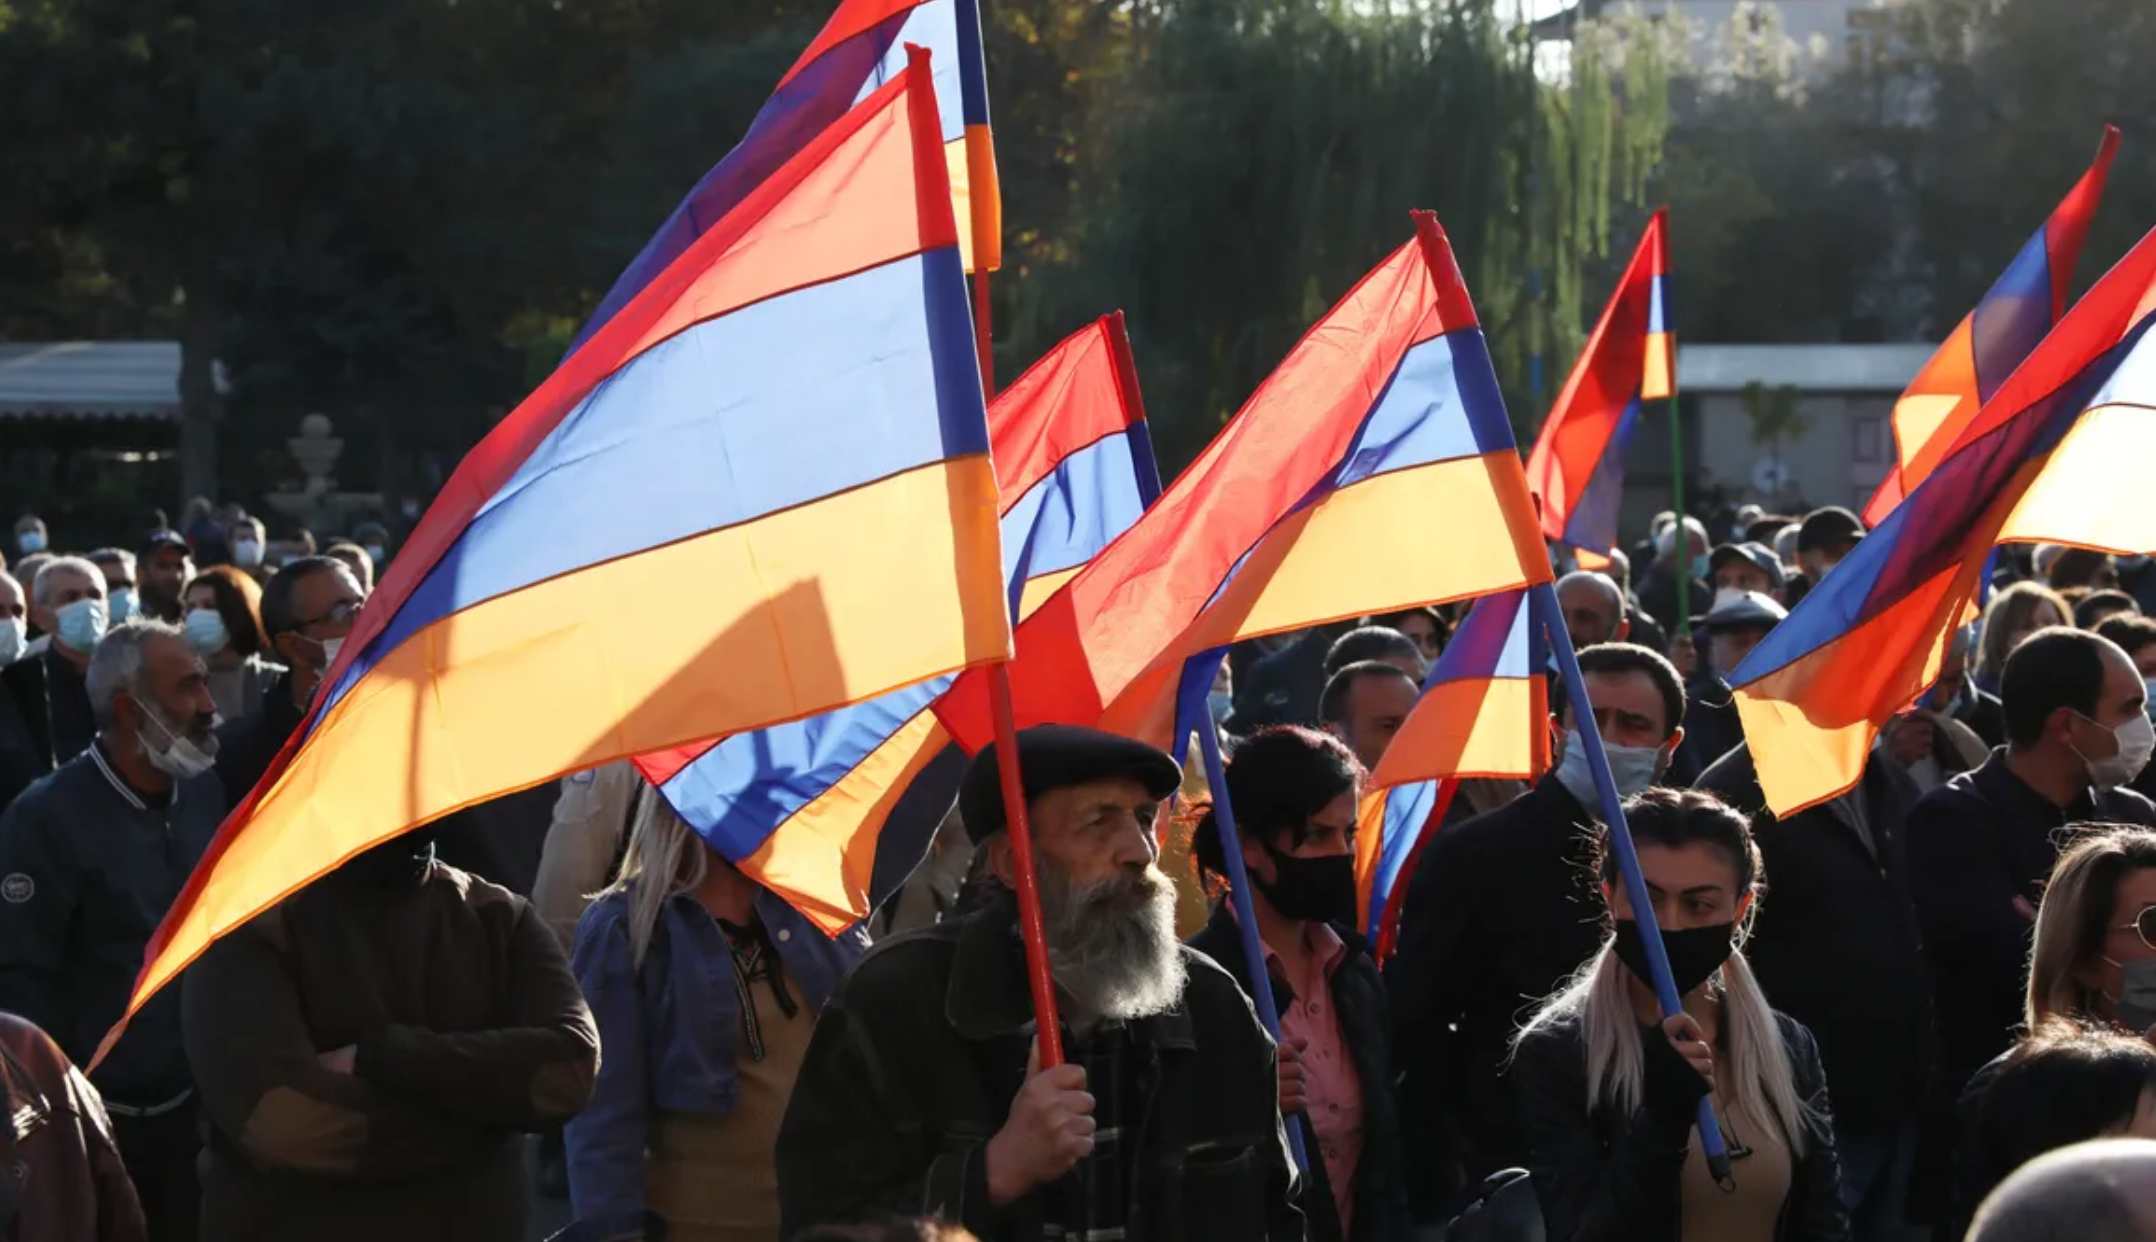 Sona Hovsepyan reports on Armenia's move to leave Russia's orbit